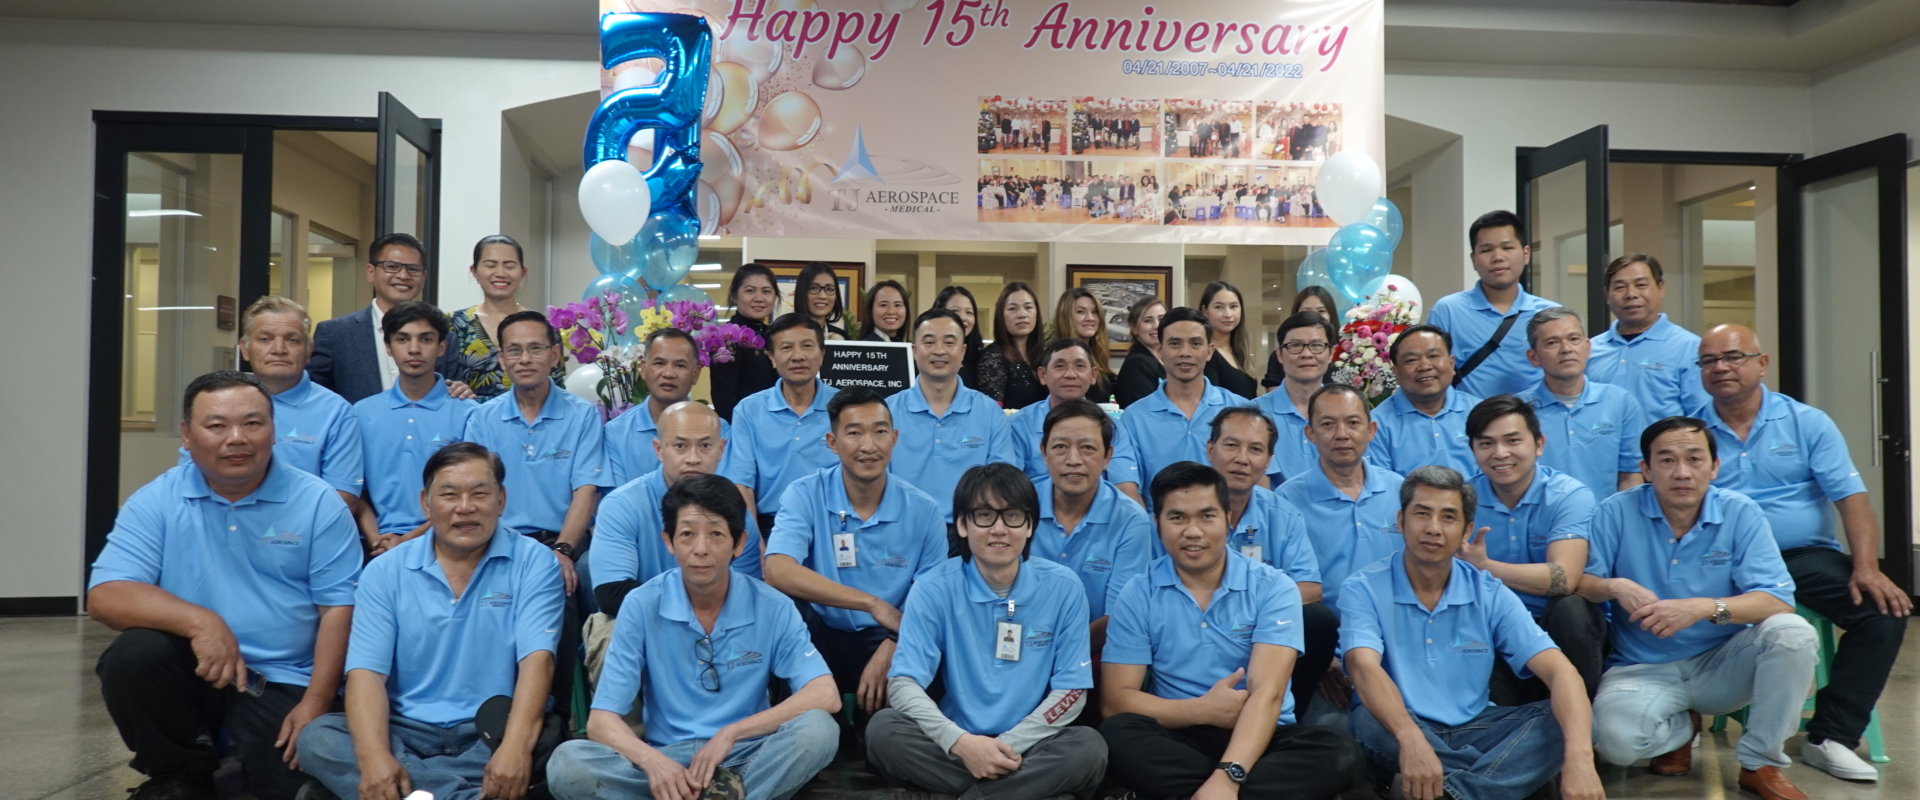 TJ Aerospace celebrates 15 years Anniversary